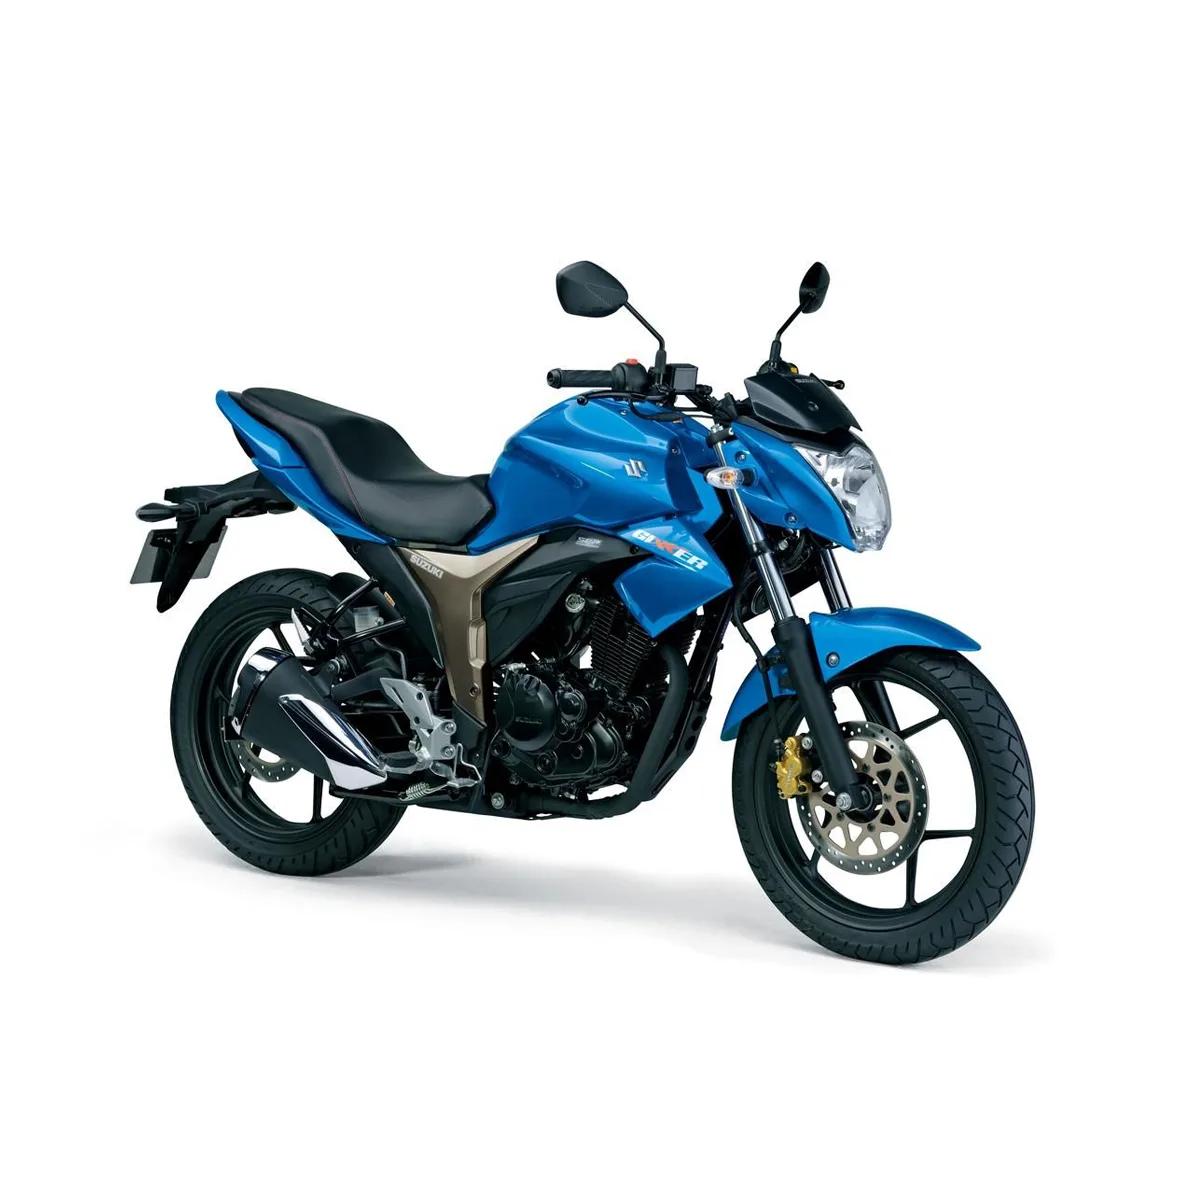 motocicleta suzuki gixxer 150 - Qué motor tiene la Suzuki Gixxer 150